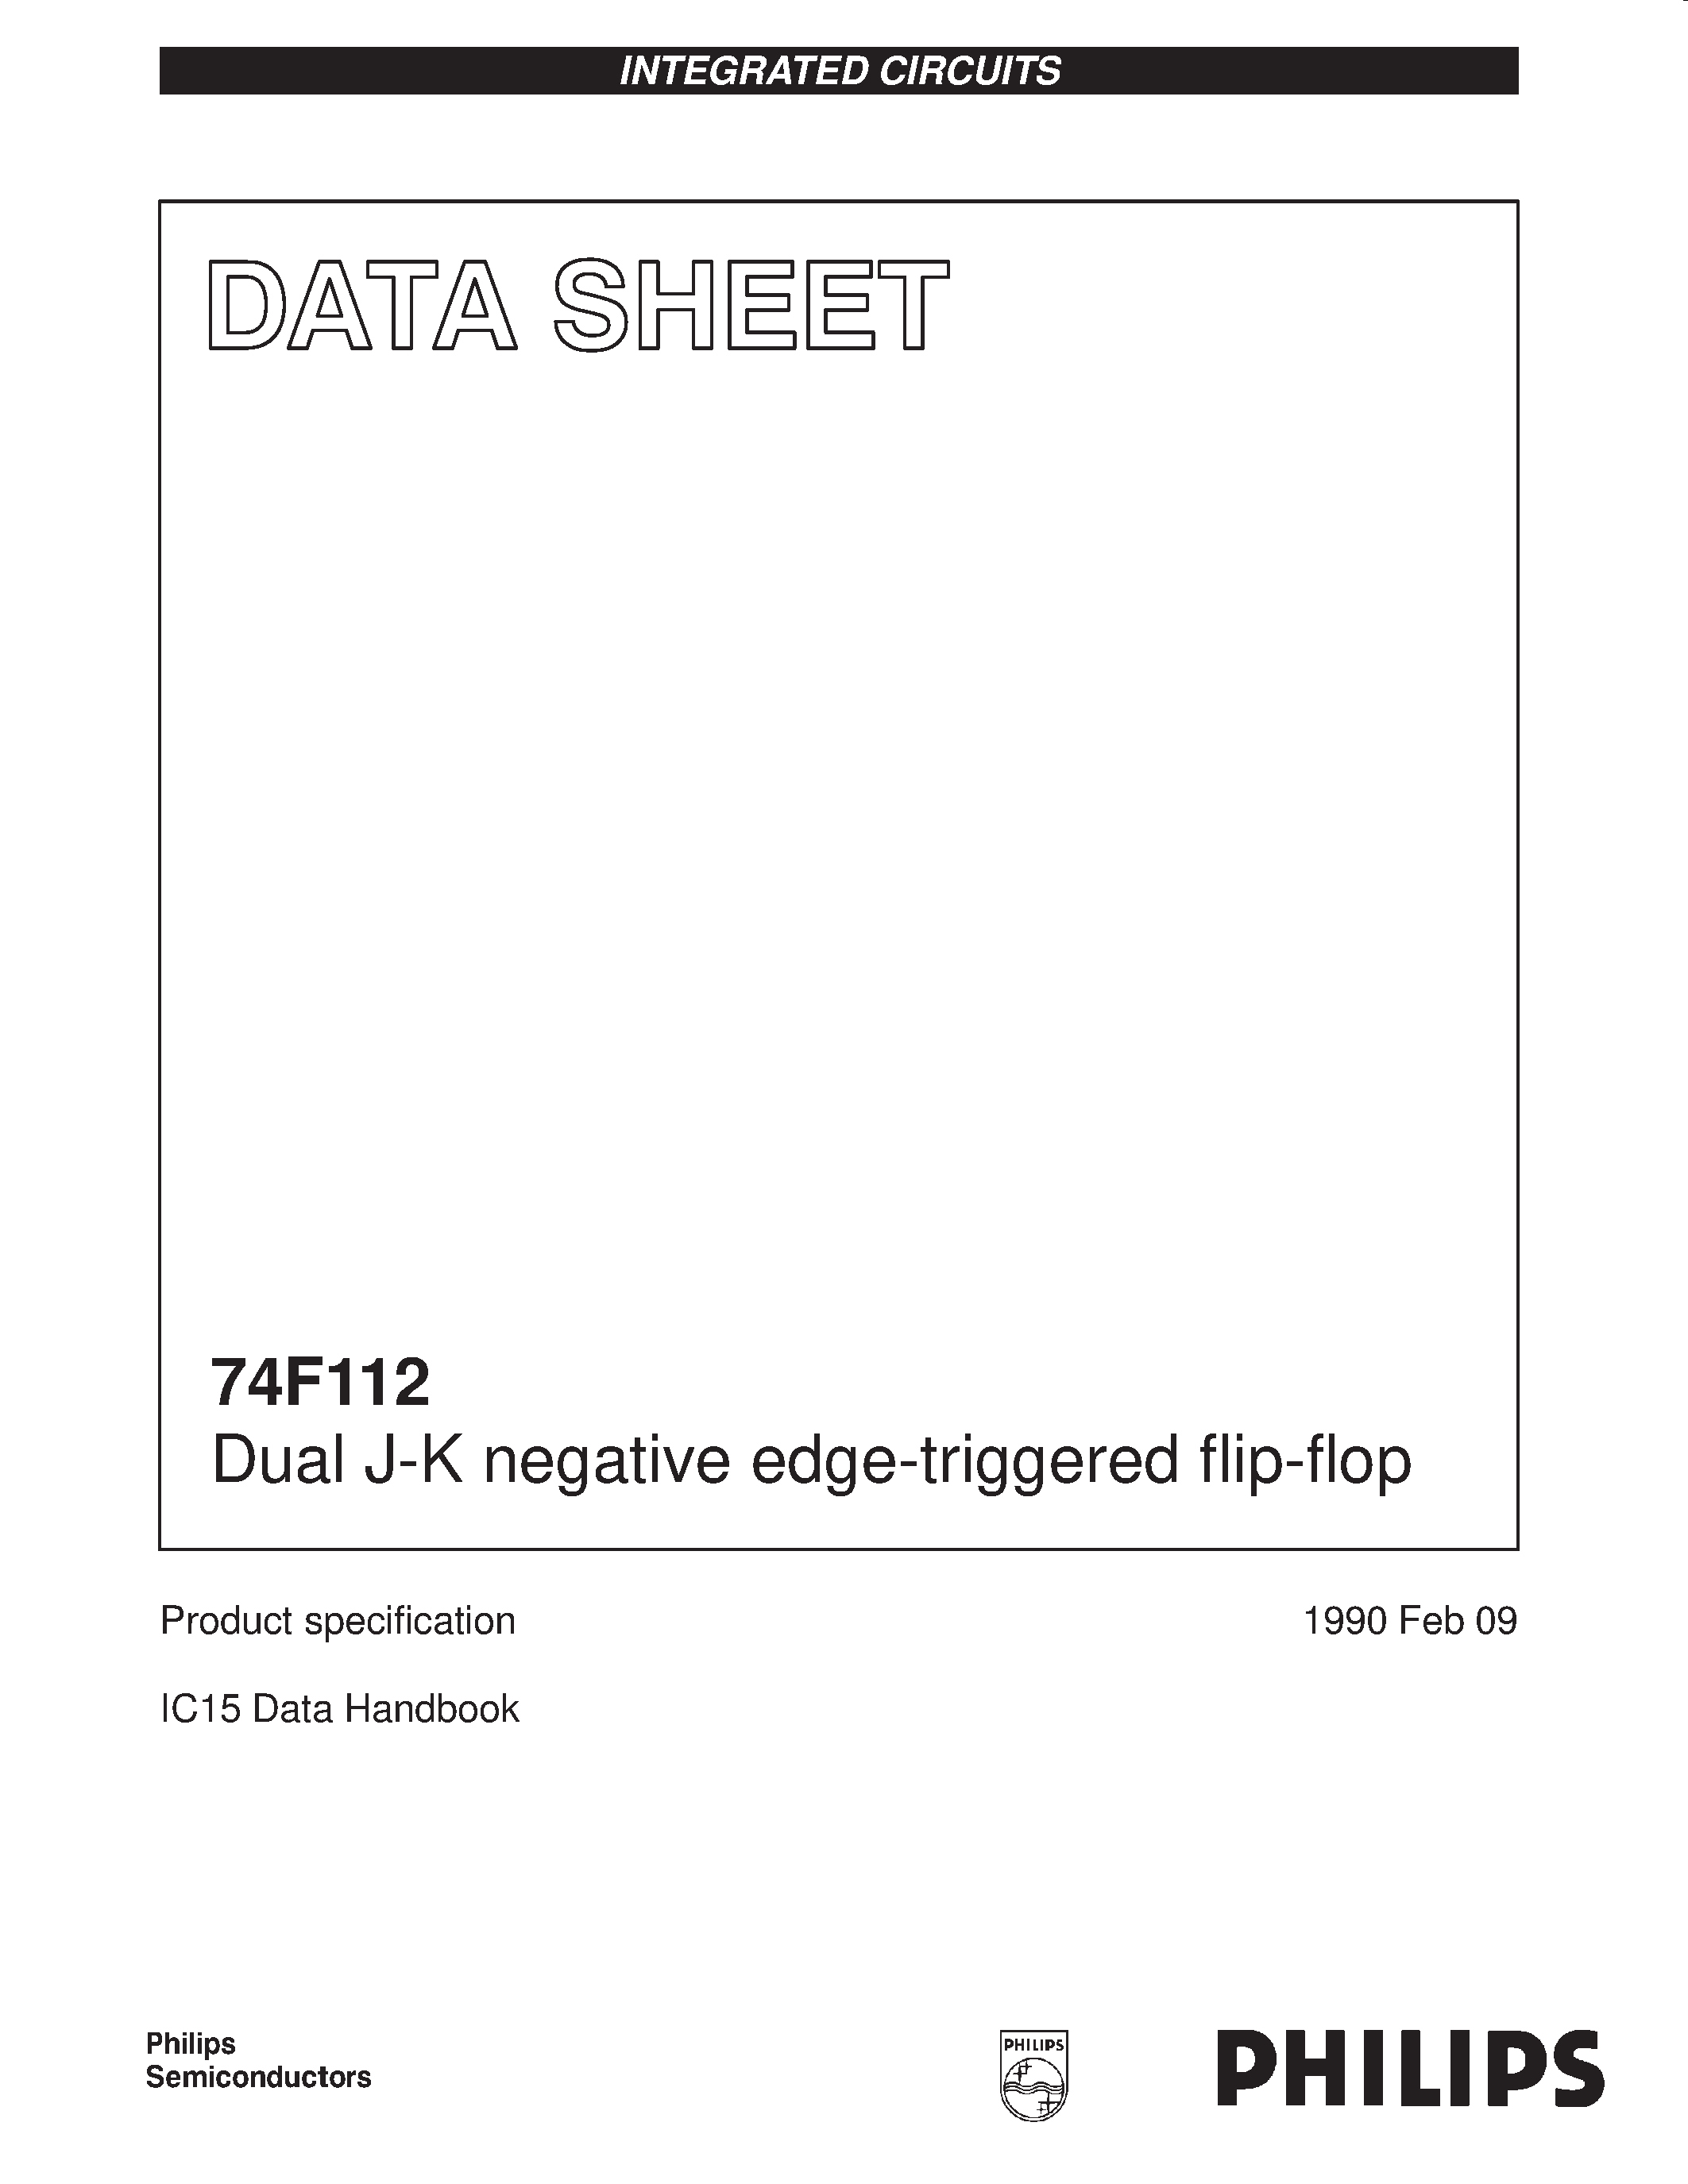 Даташит N74F112N - Dual J-K negative edge-triggered flip-flop страница 1